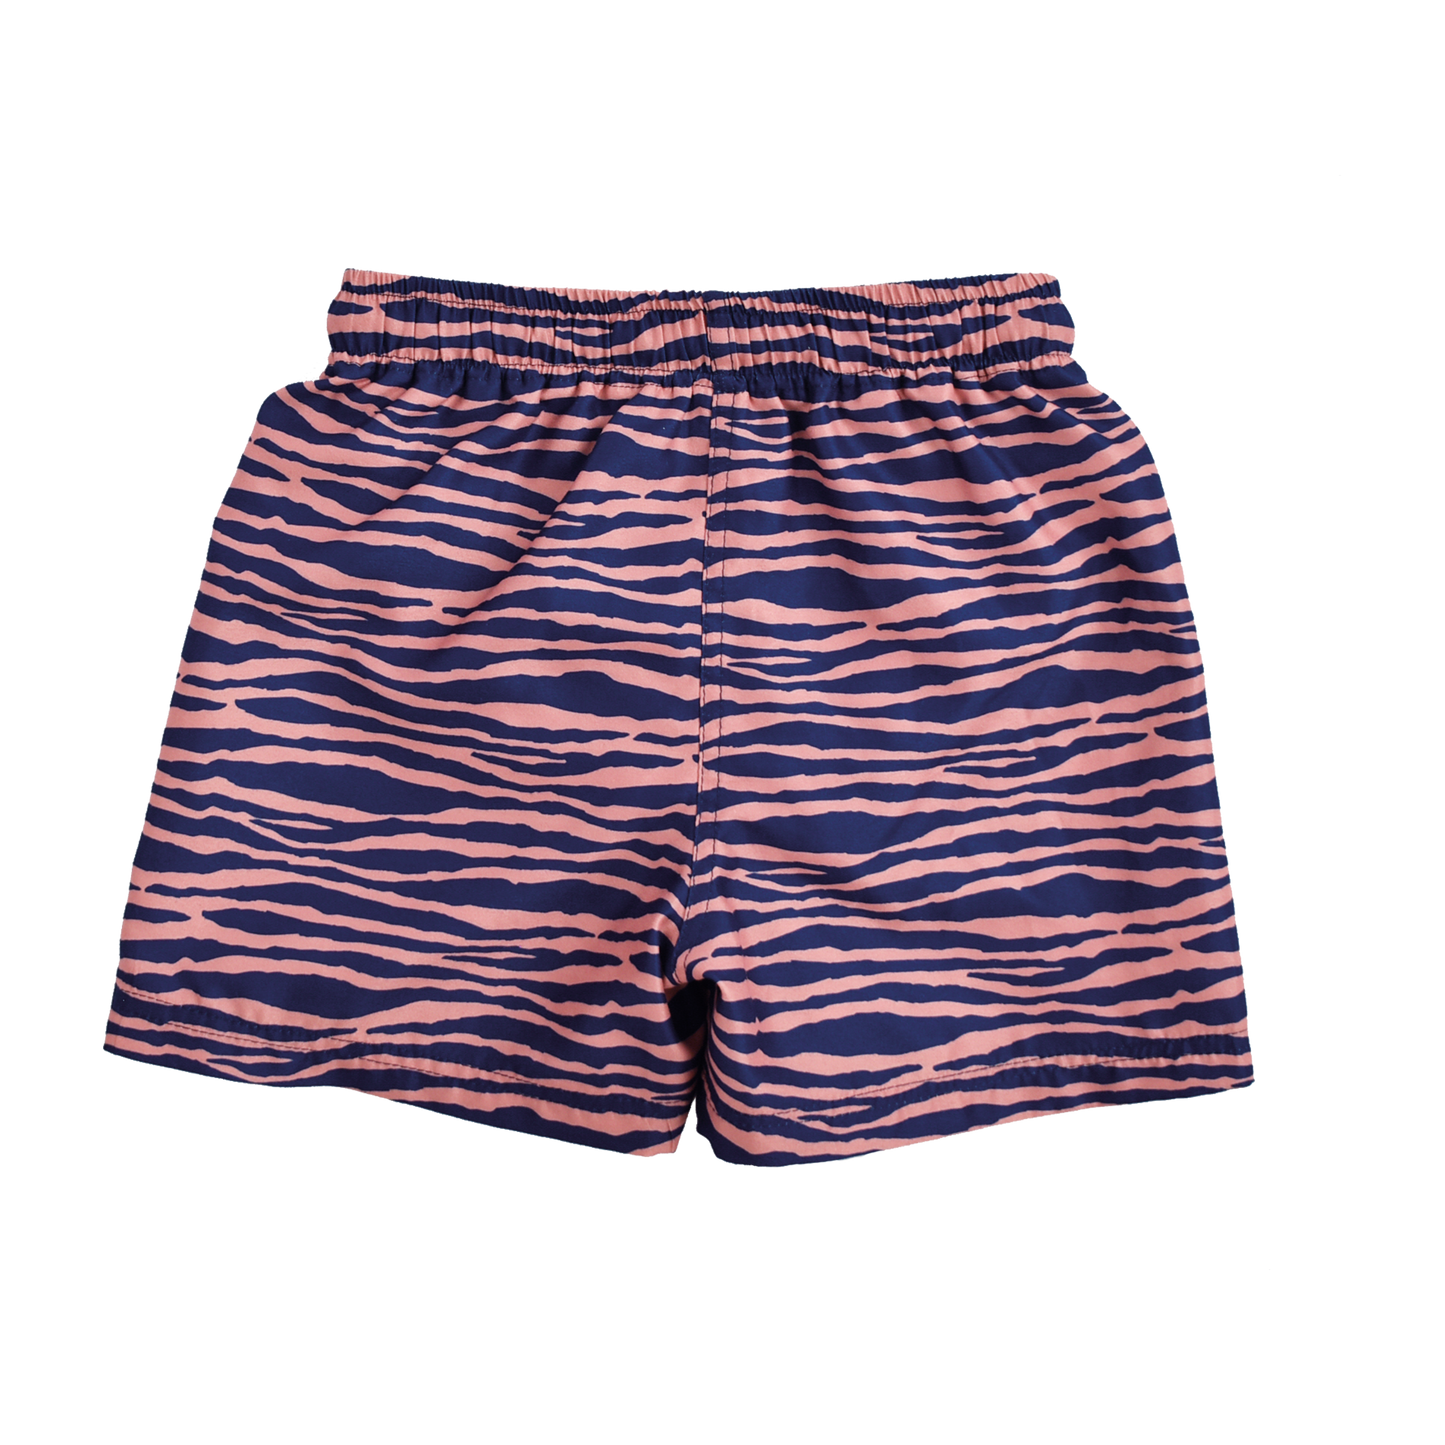 SE UV Badeshorts Jungen Blau Orange Zebra